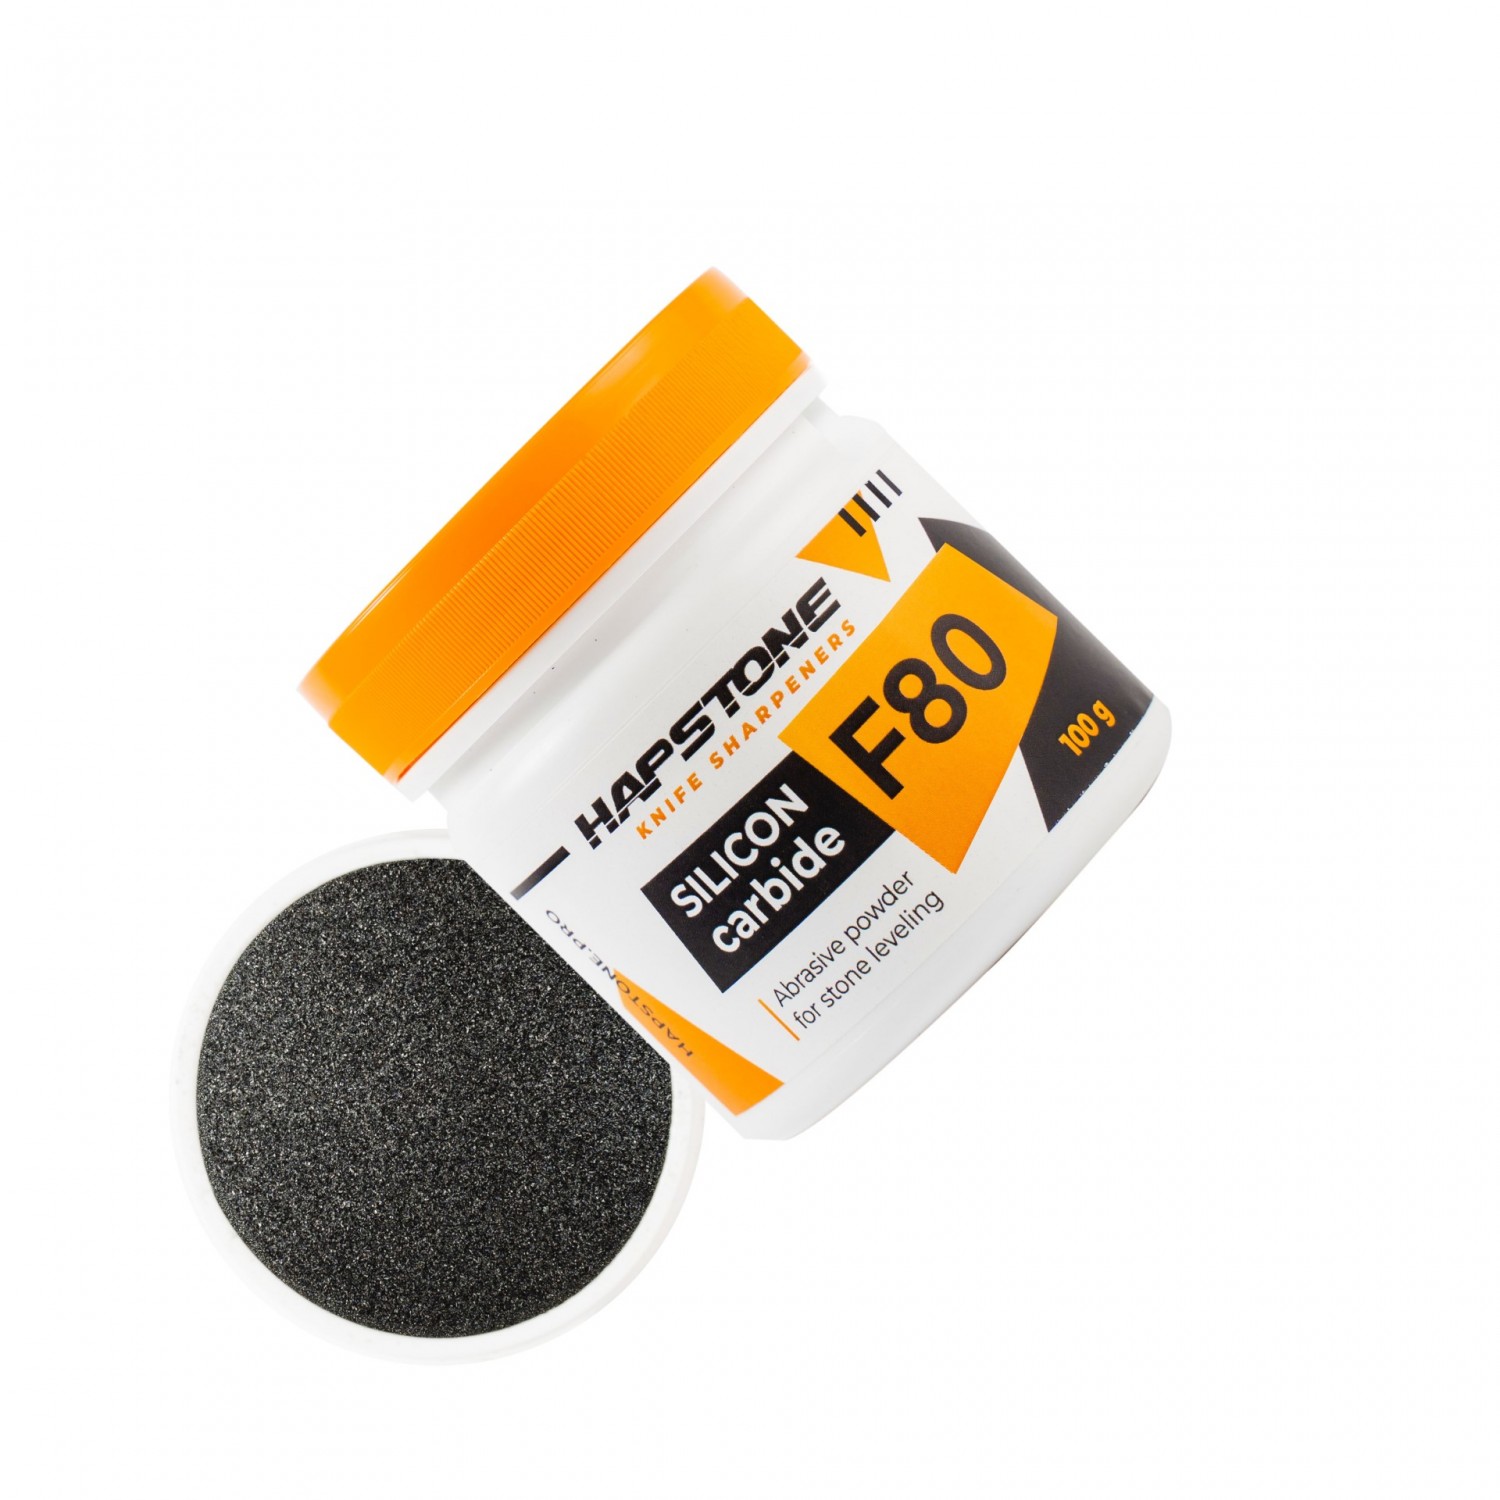 Silicon carbide powder Hapstone for leveling stones 100g